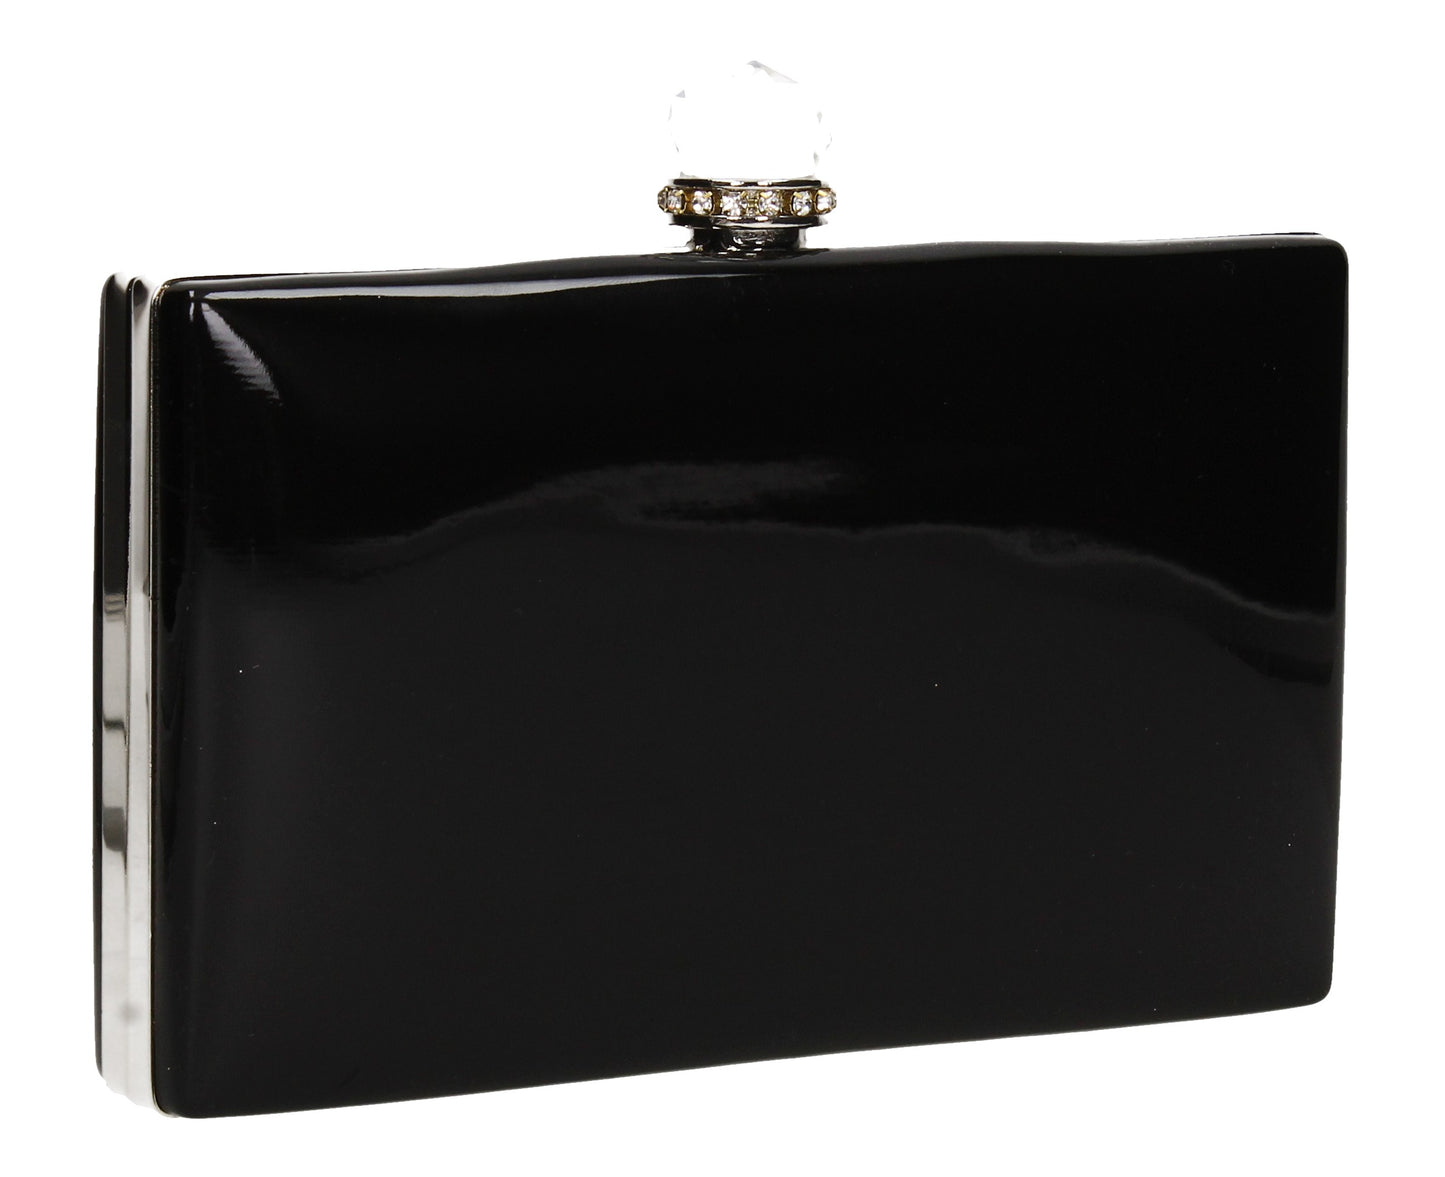 SWANKYSWANS Emilia Patent Clutch Bag Black Cute Cheap Clutch Bag For Weddings School and Work